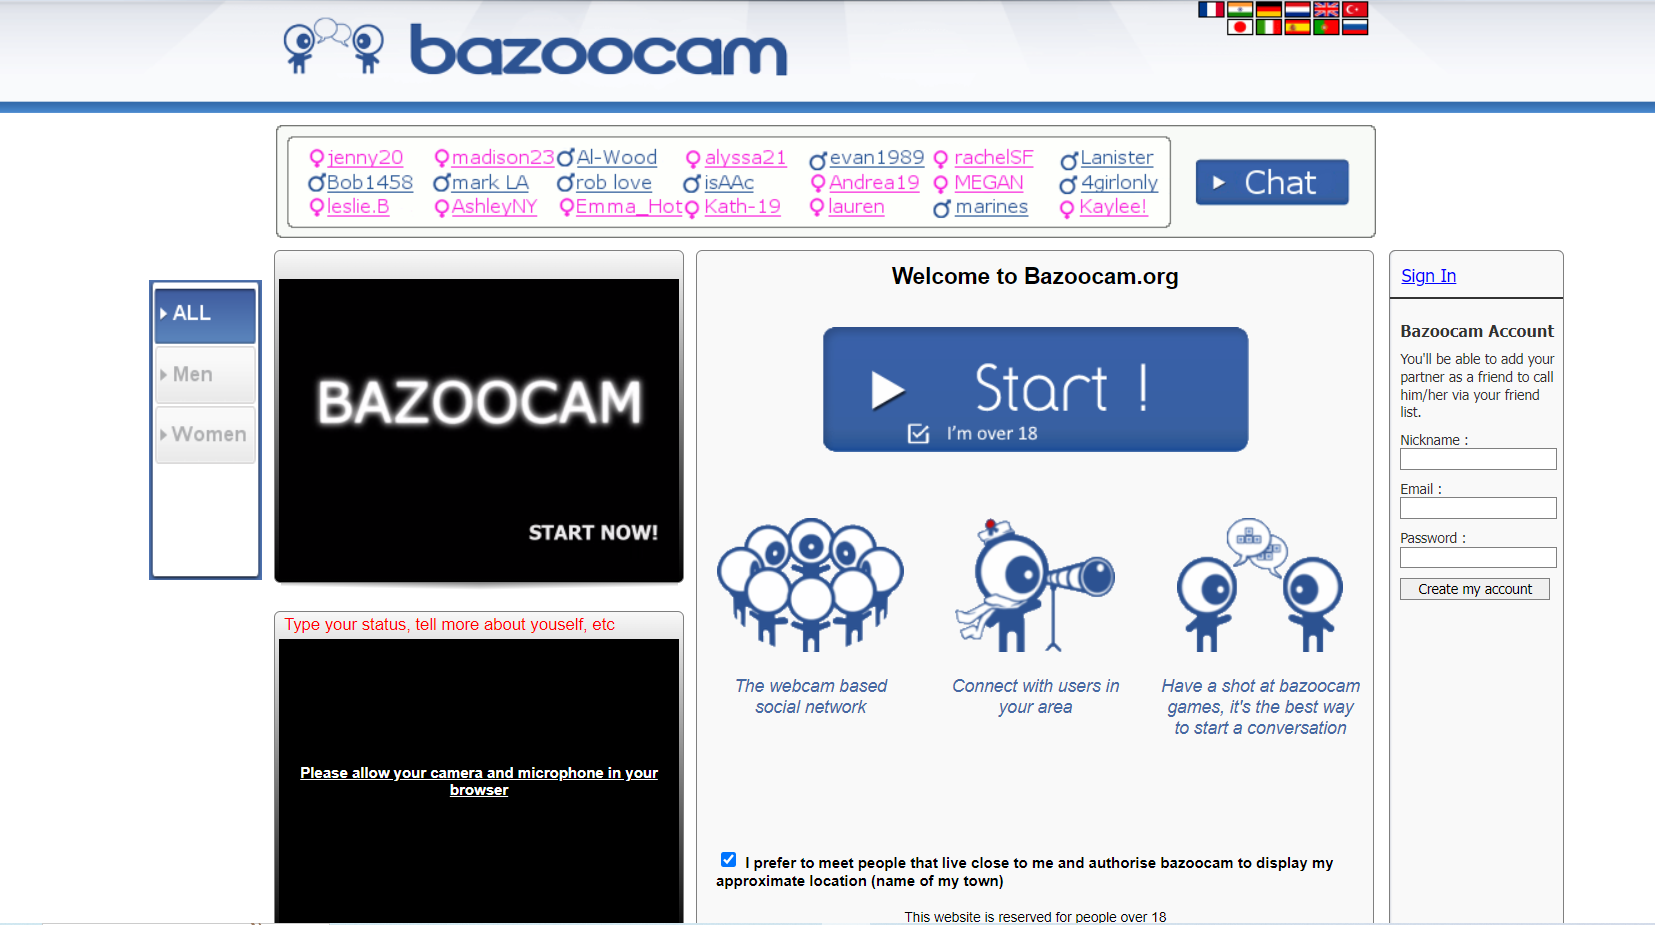 Bazoocam's homepage.